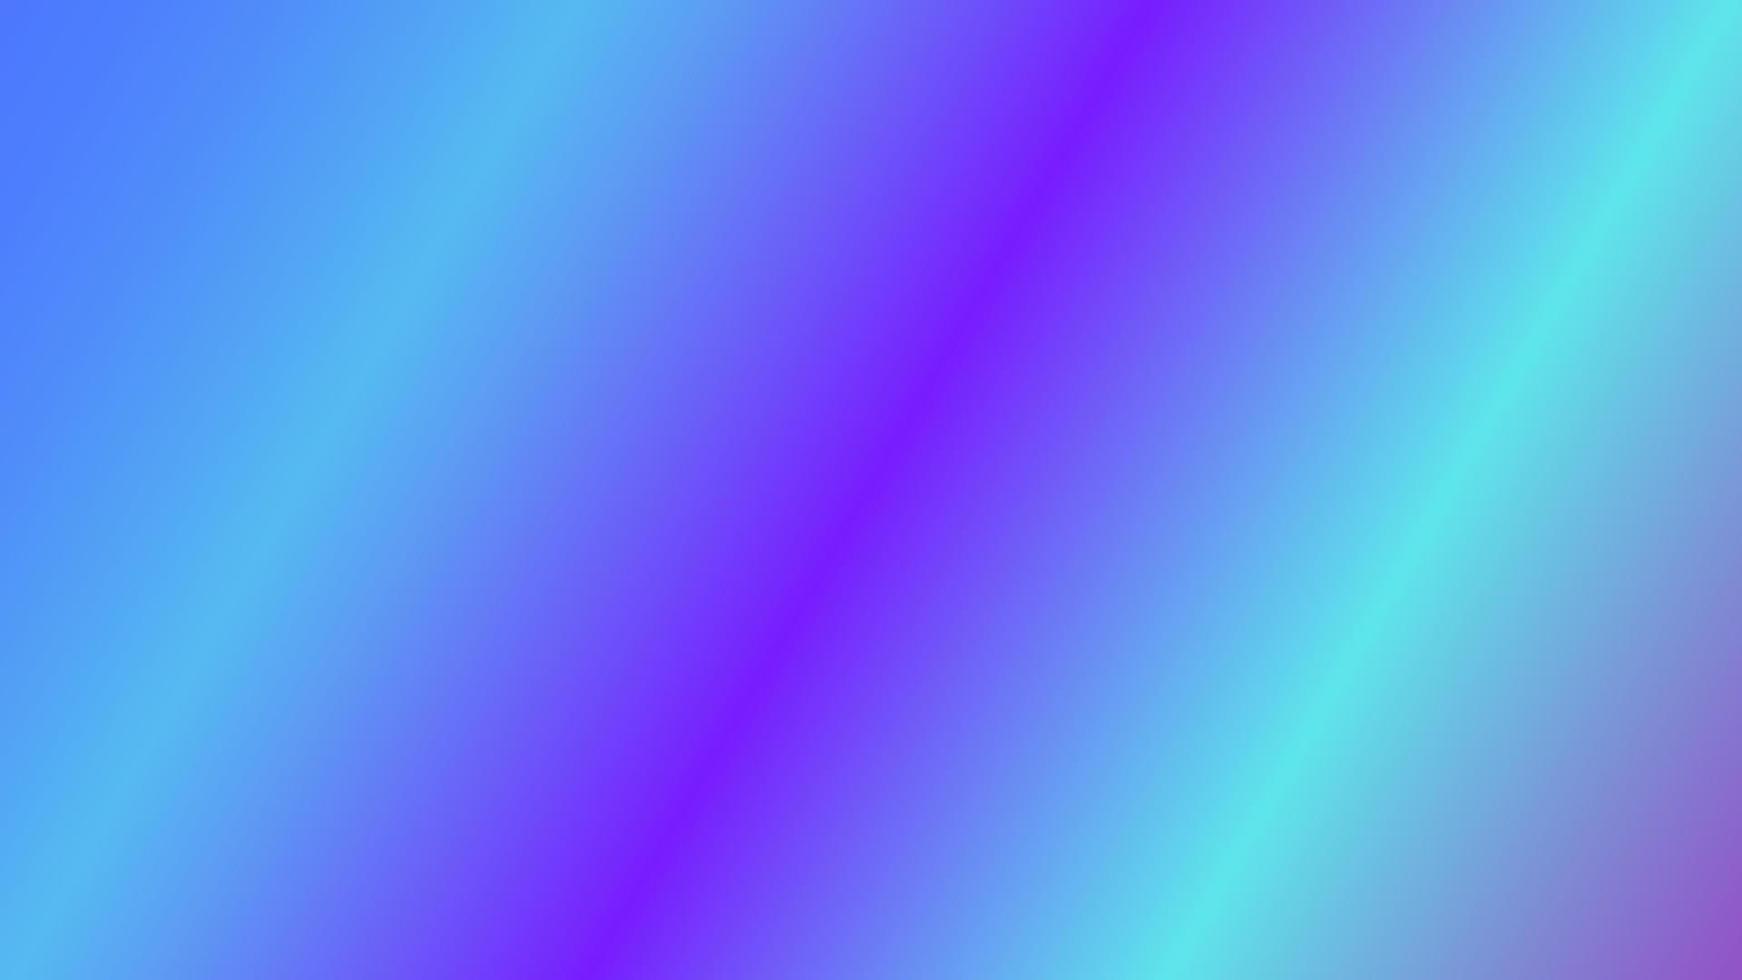 fondo degradado abstracto azul aqua estilo elegante perfecto para diseño, papel tapiz, promoción, presentación, sitio web, banner, etc. fondo de ilustración vector